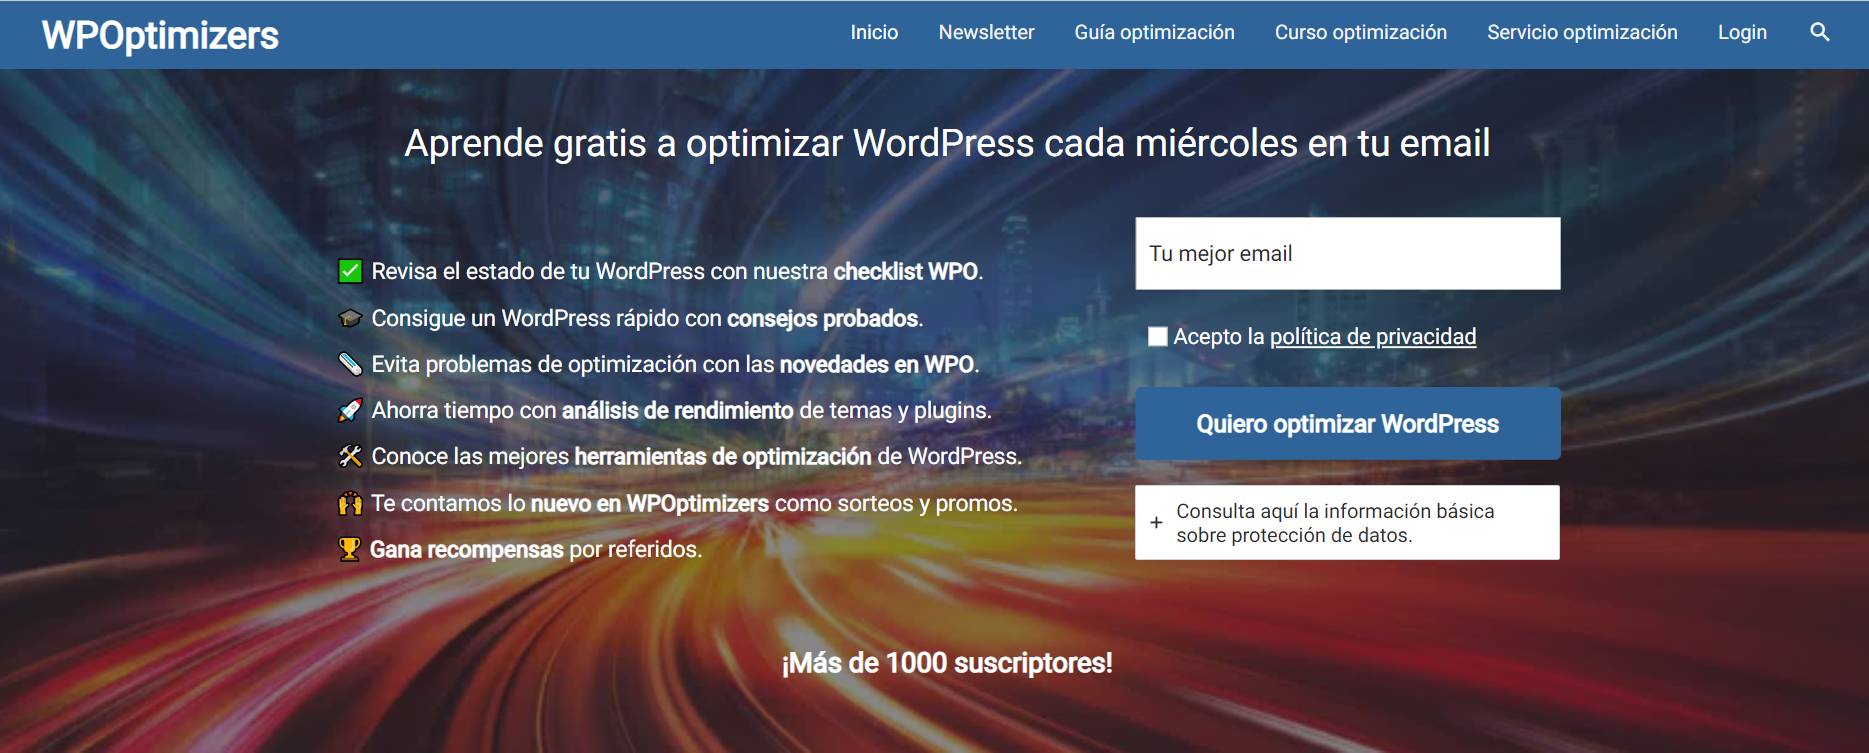 WPOptimizers Comunidad Online WordPress Modular